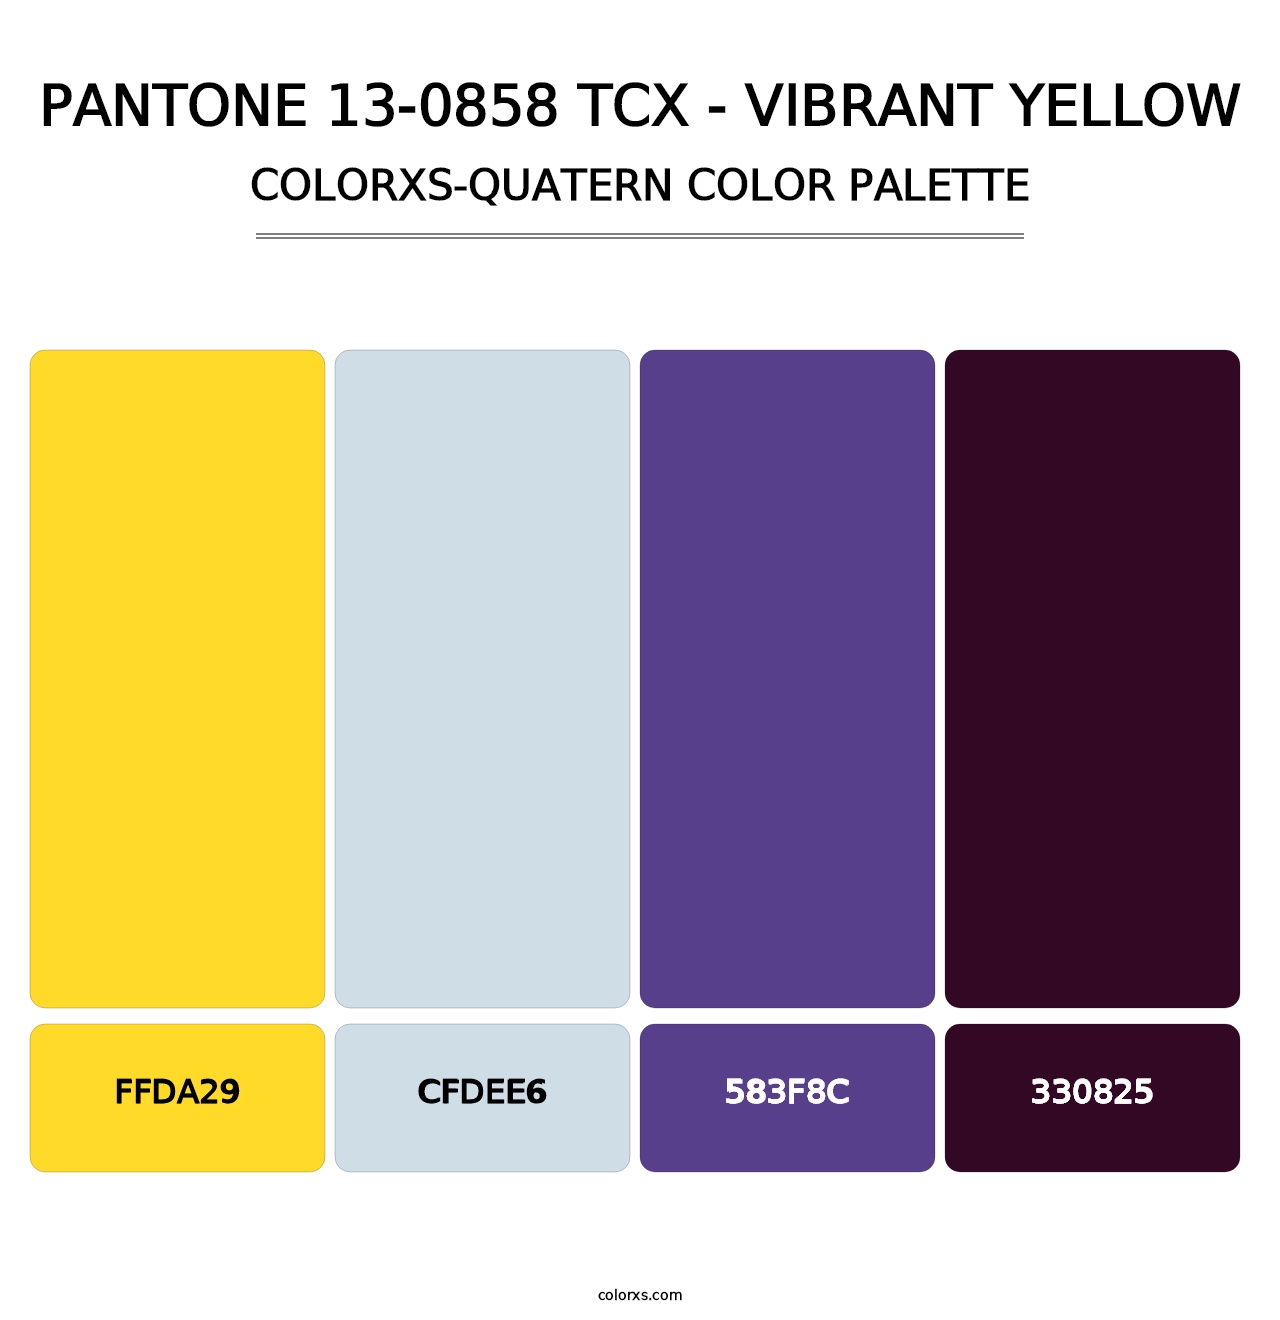 PANTONE 13-0858 TCX - Vibrant Yellow - Colorxs Quatern Palette